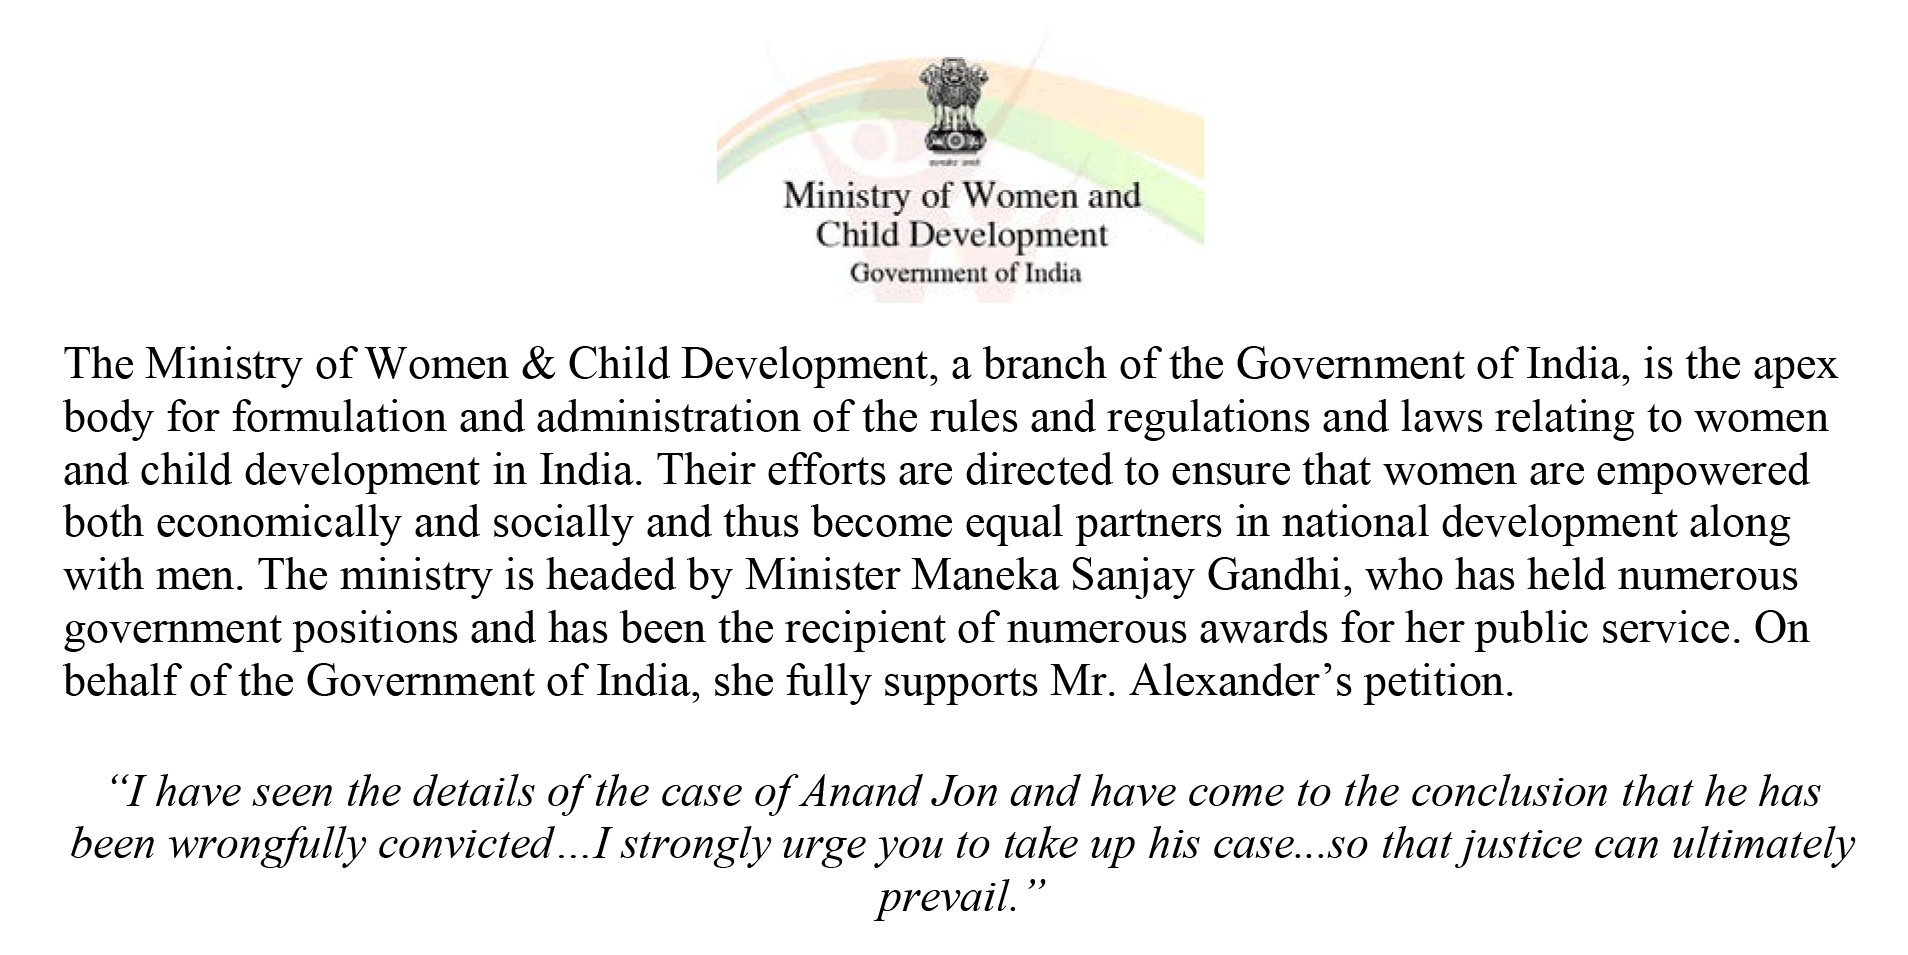 The Ministry of Women & Child Development